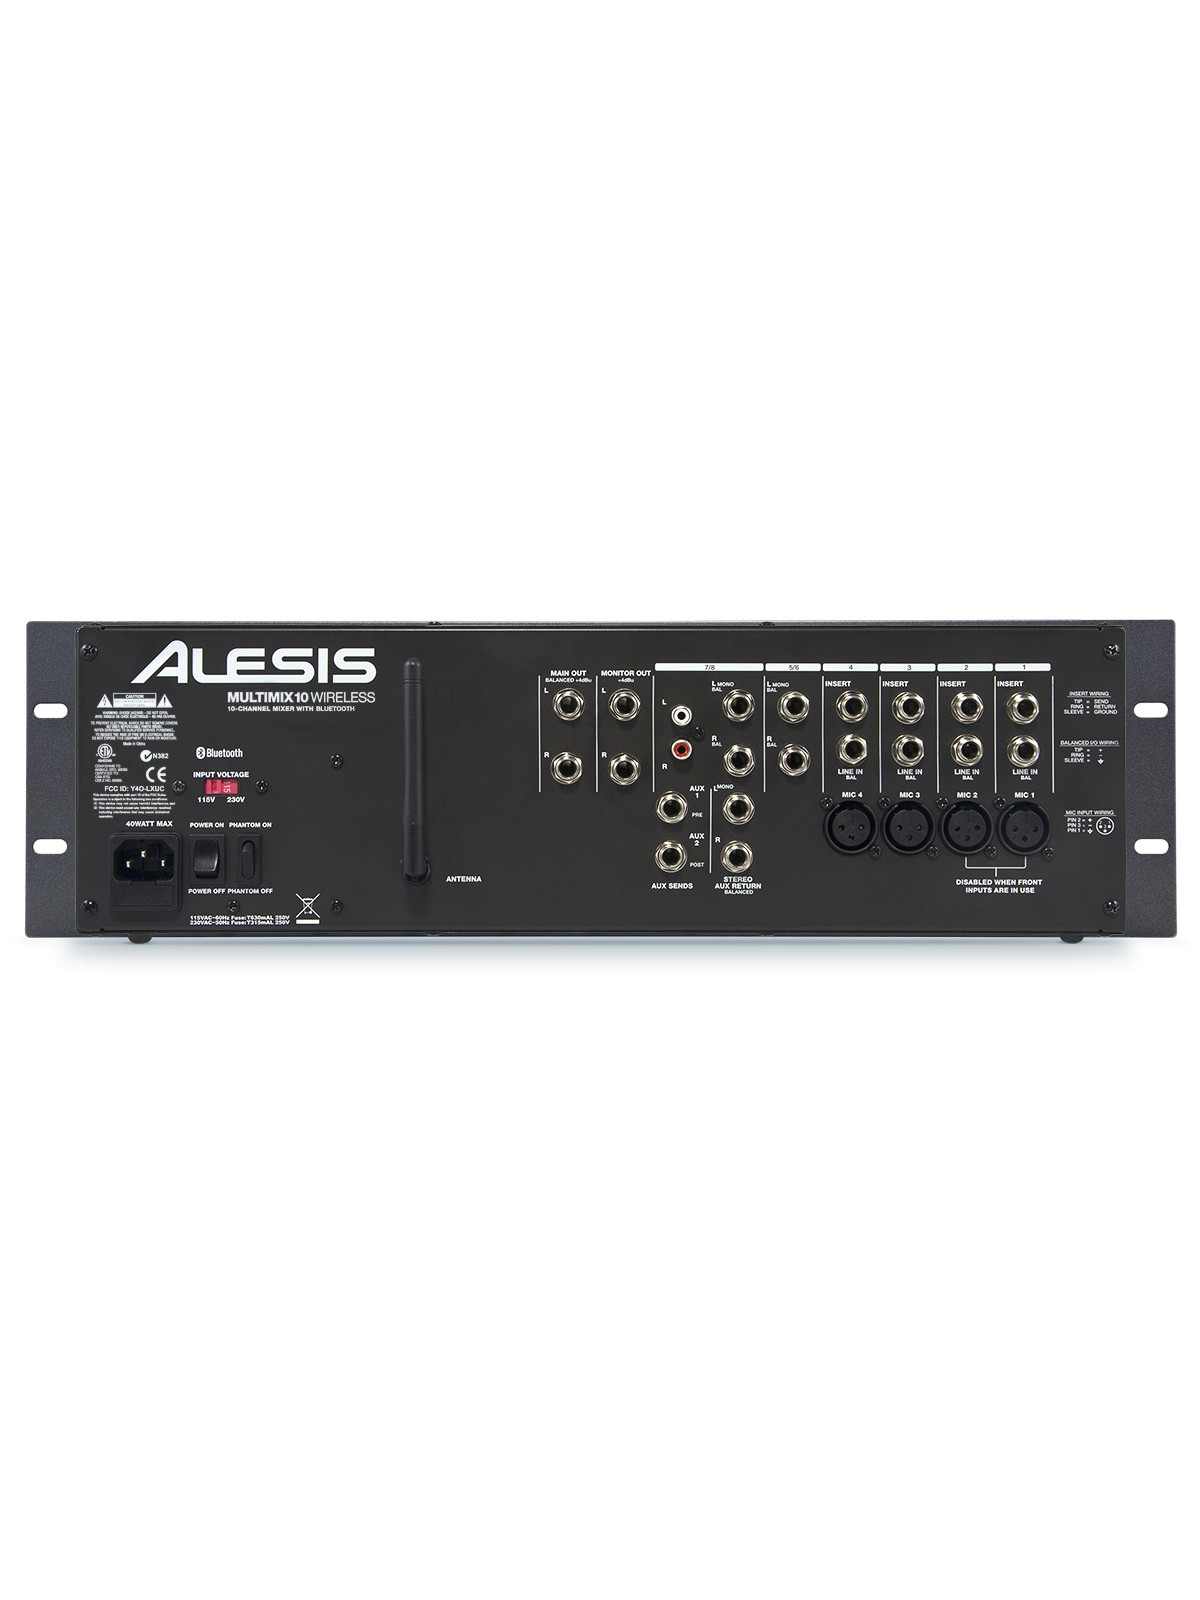 Alesis MM1010WL Multimix wireless